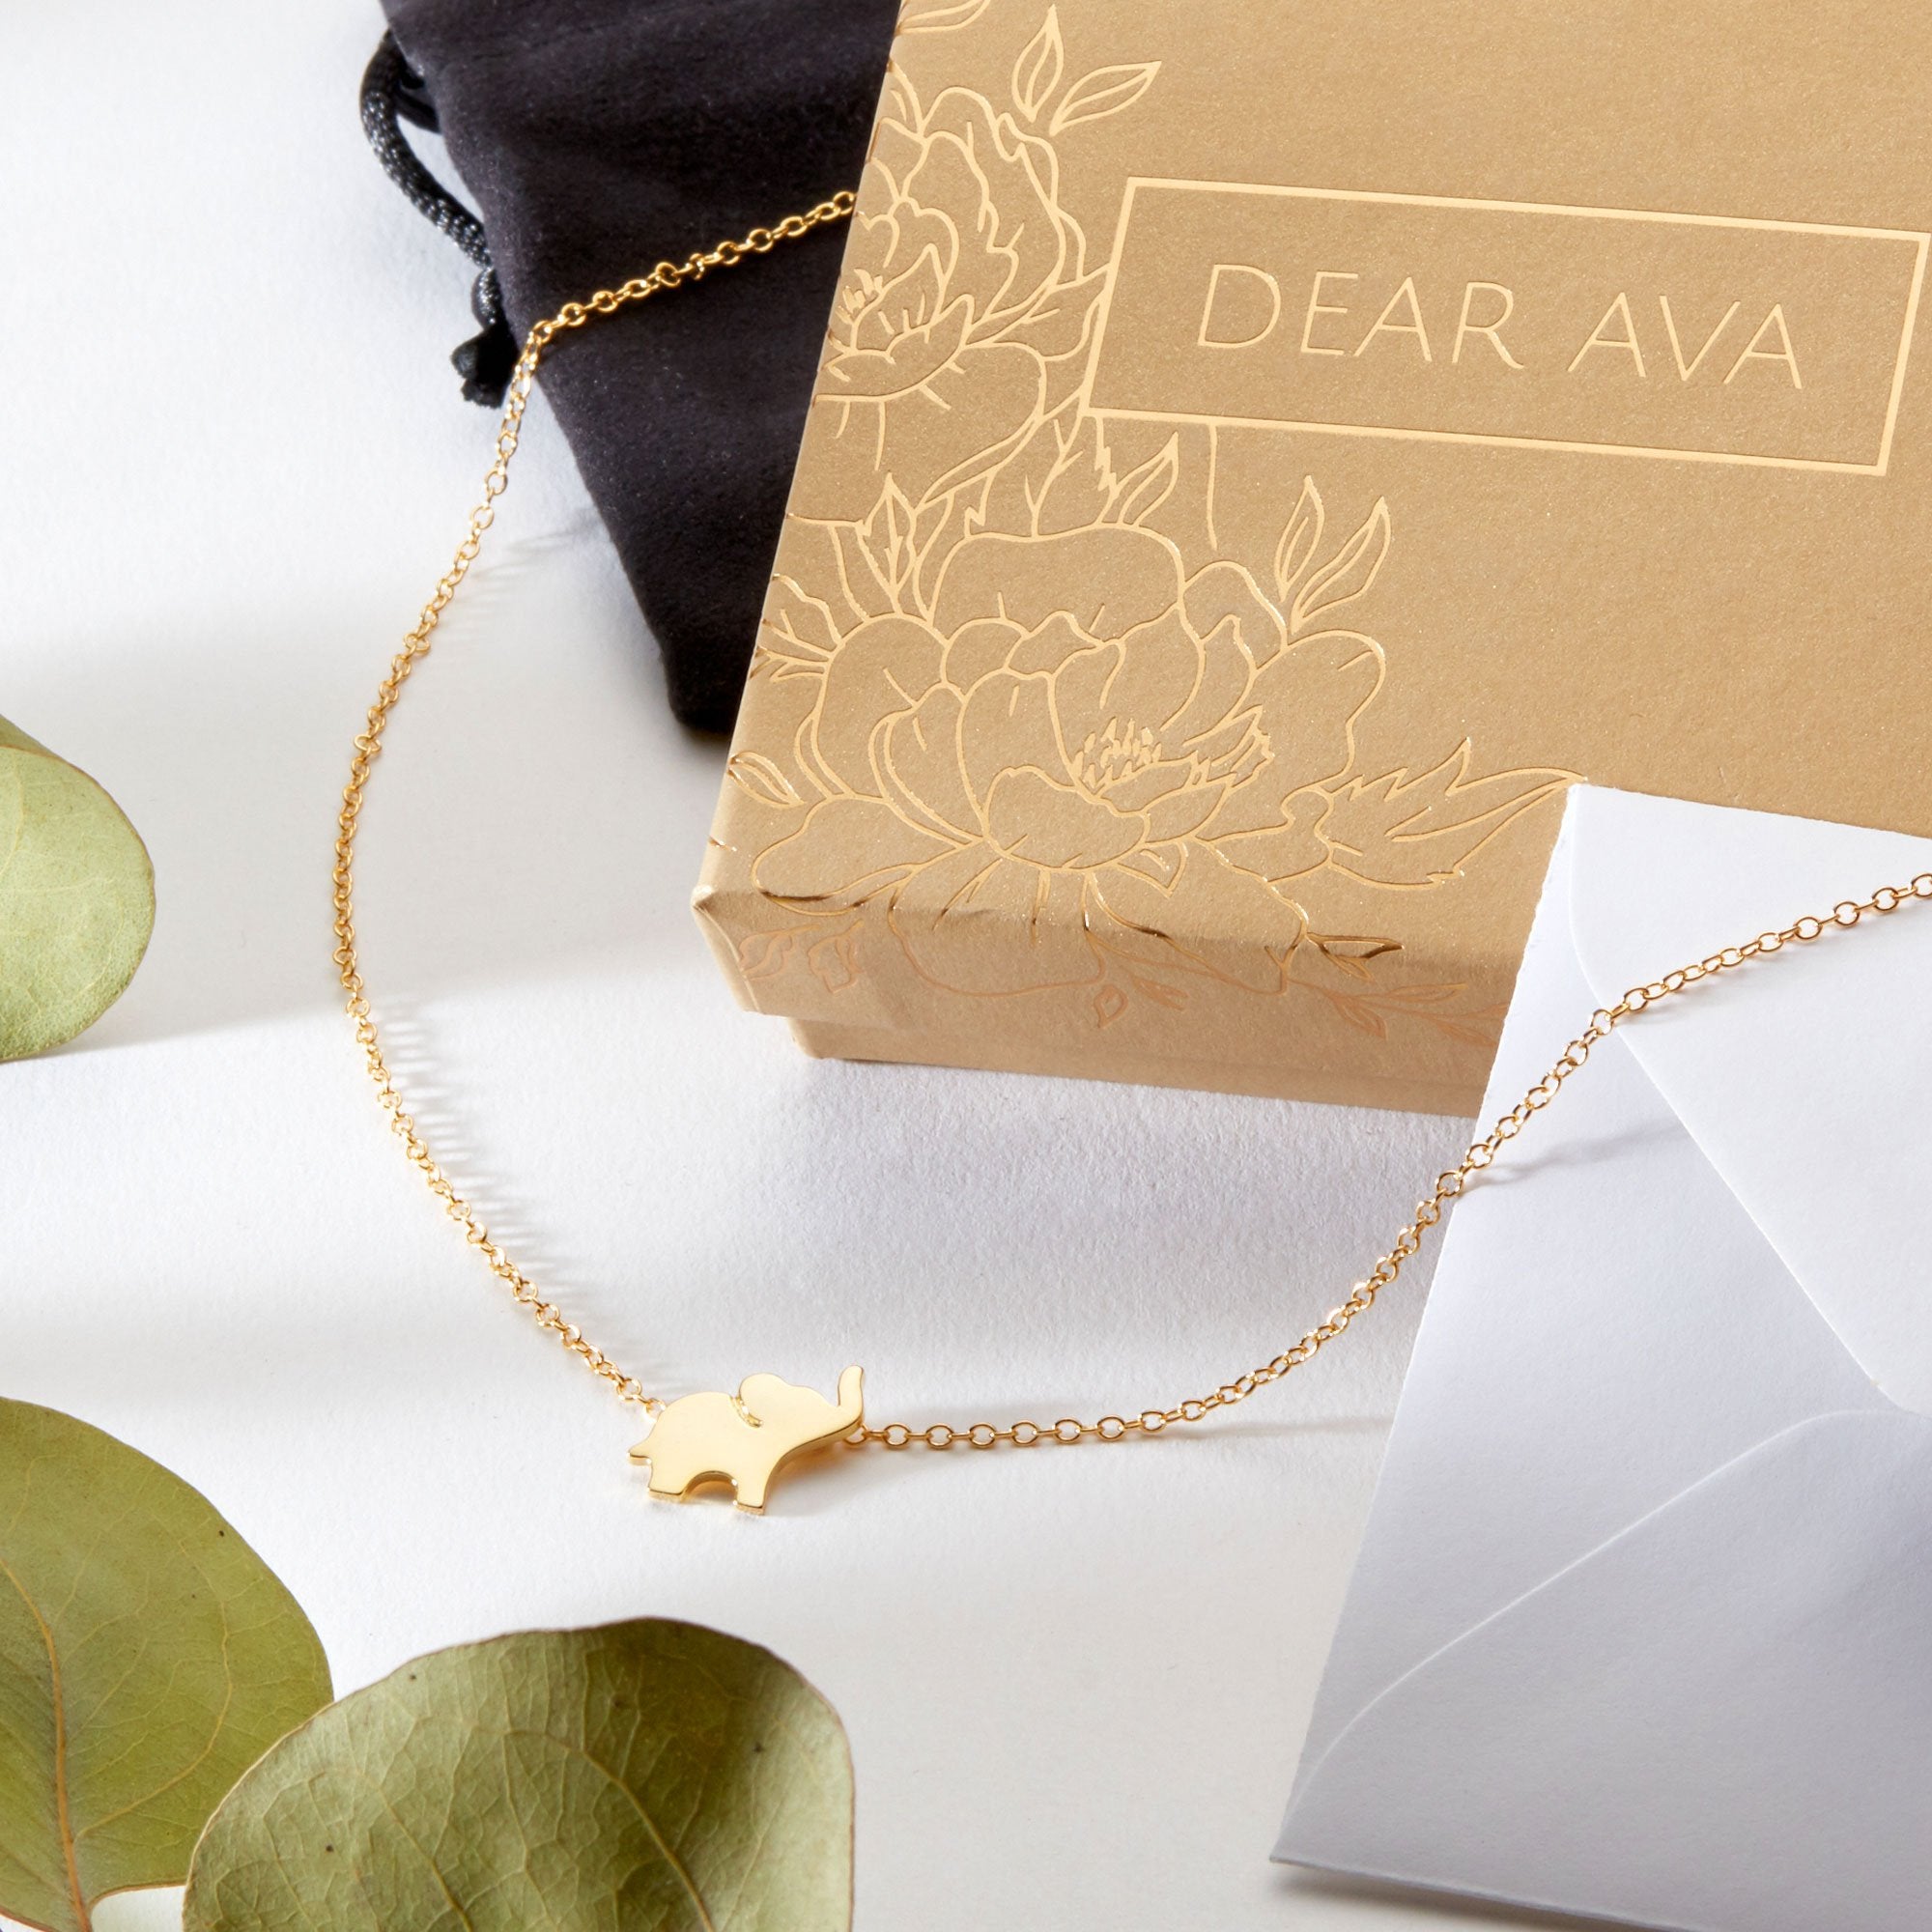 Unbiological Mom Gift Box Set - Dear Ava